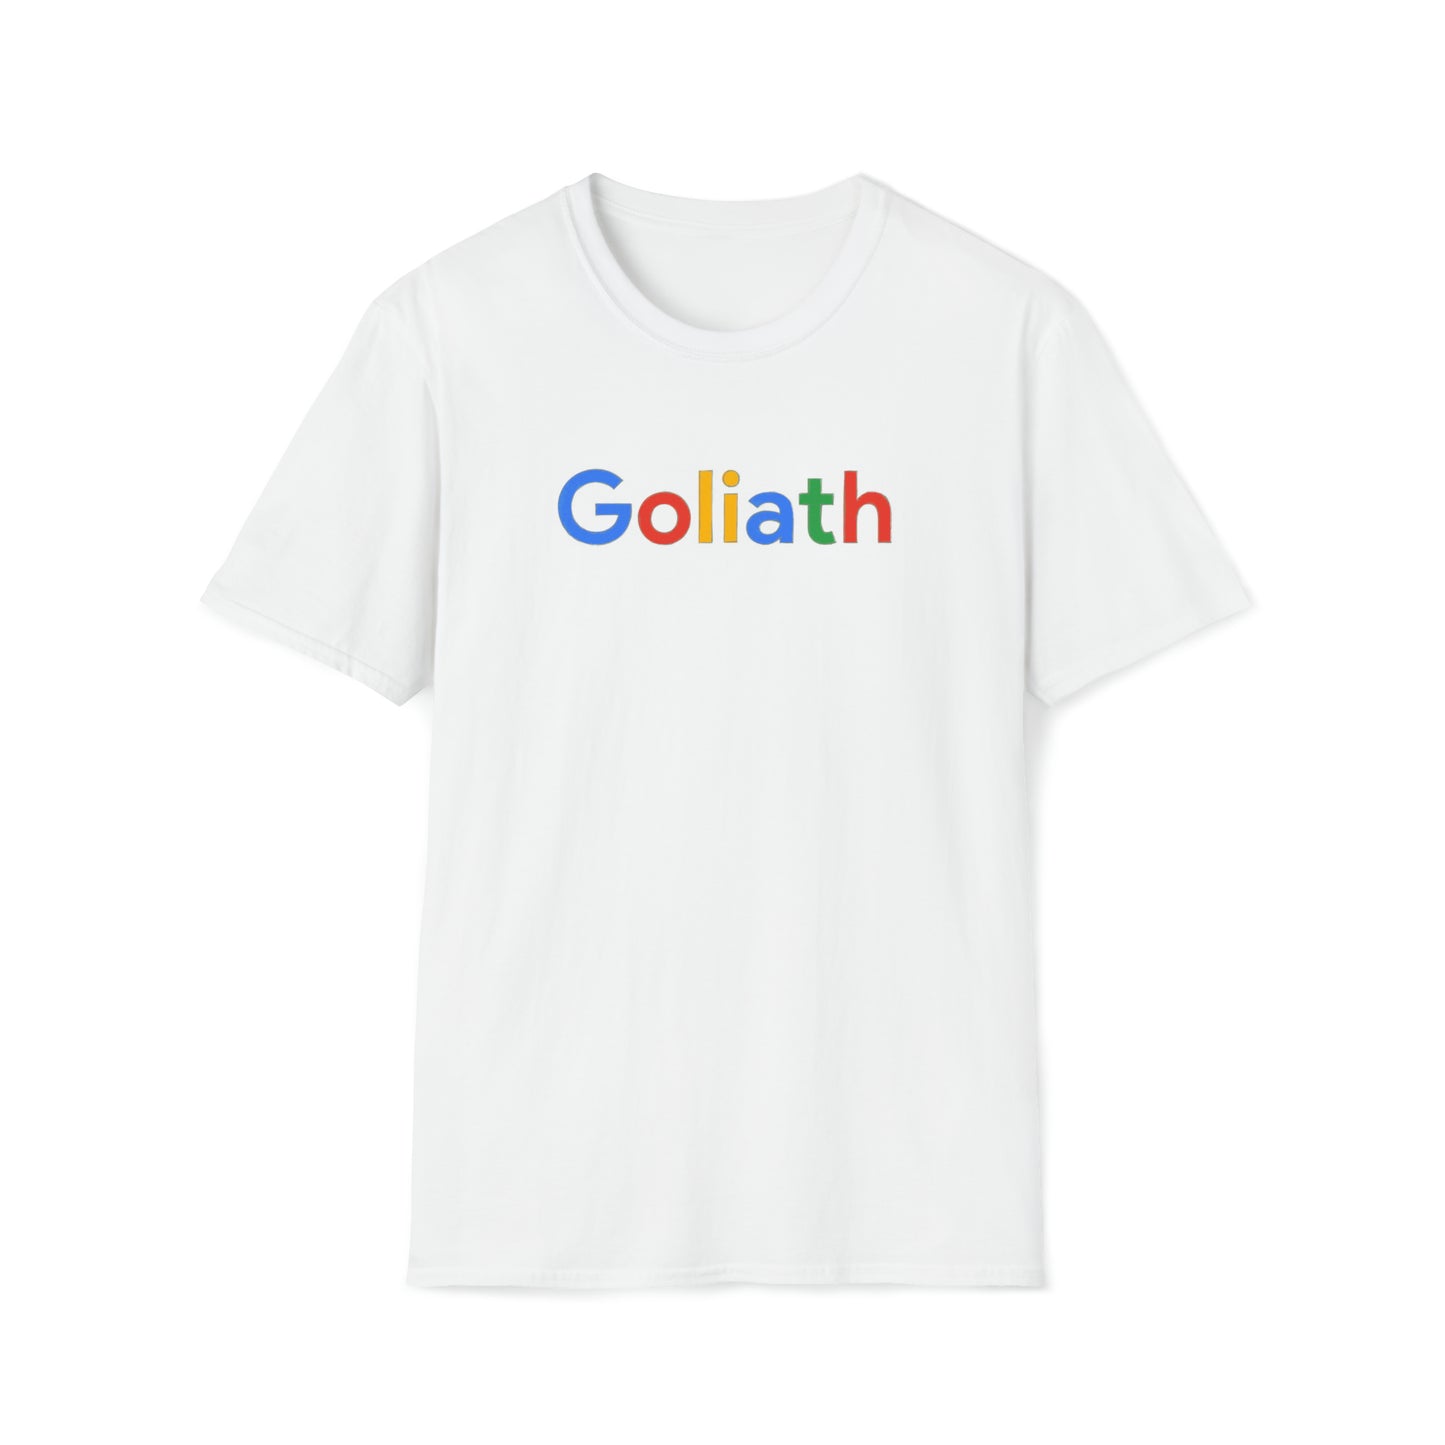 Goliath T-Shirt - Unisex